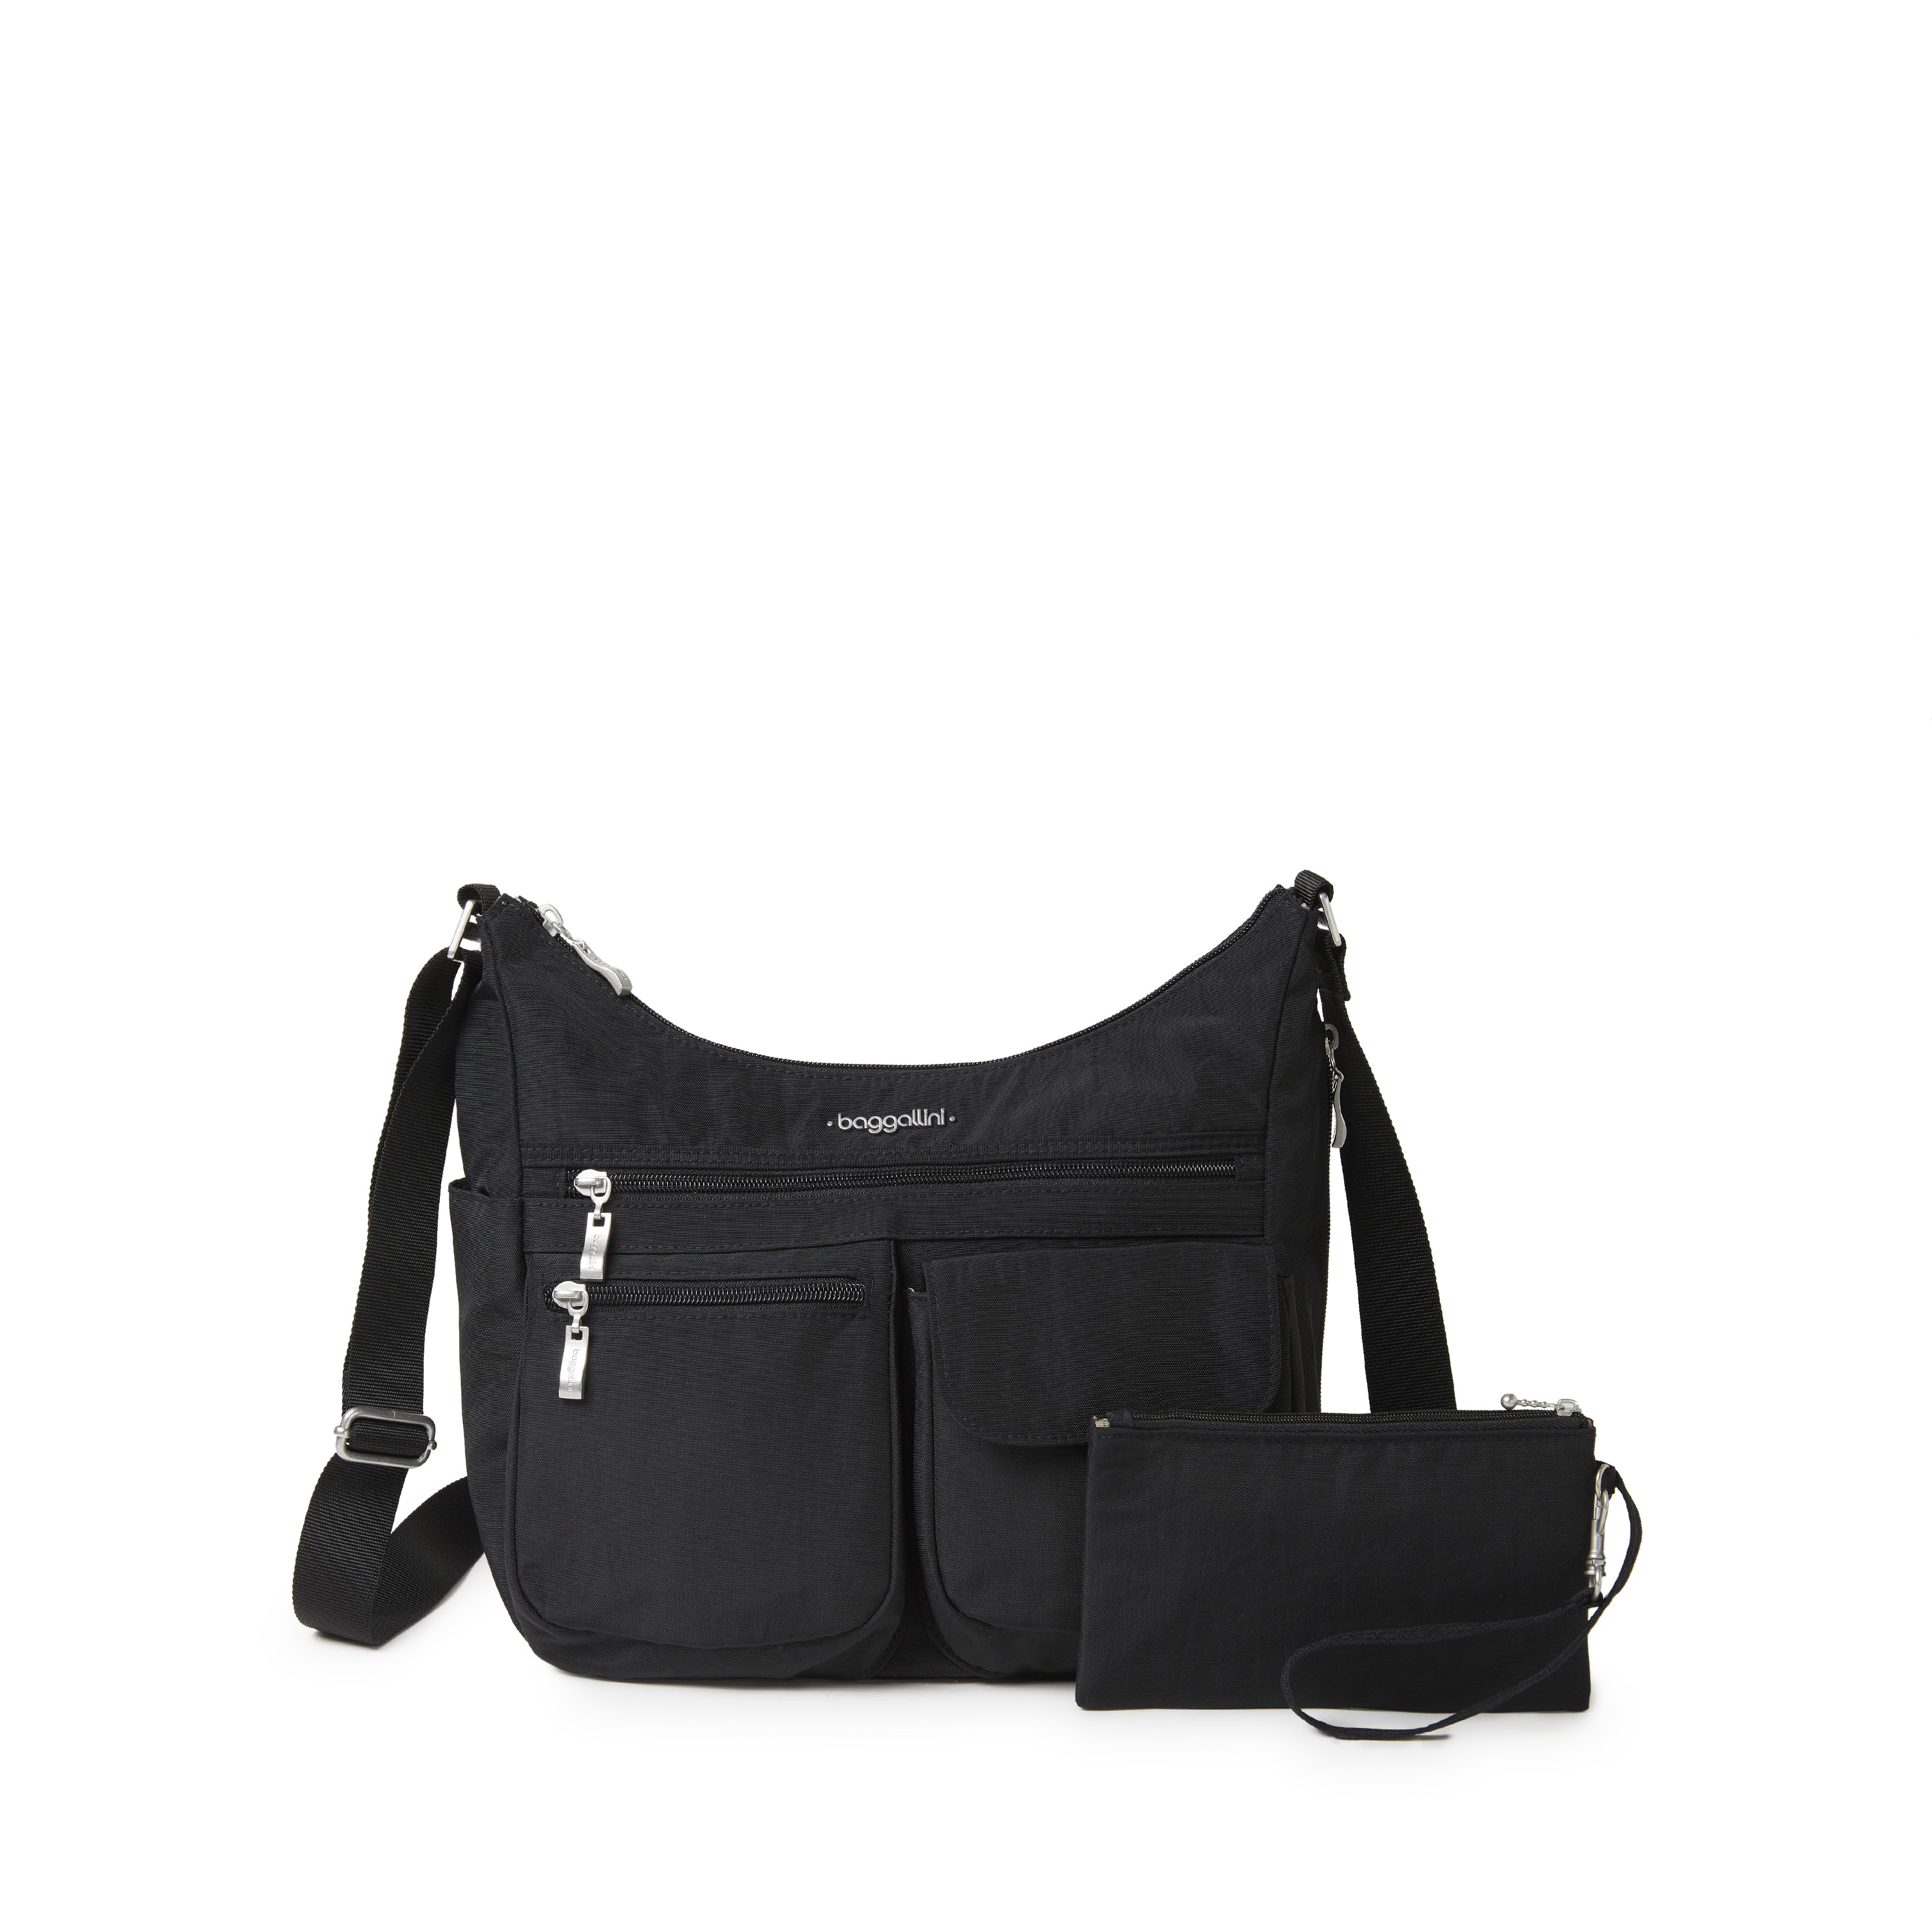 Baggallini - Everywhere Bag (Black/Sand) Cross Body Handbags